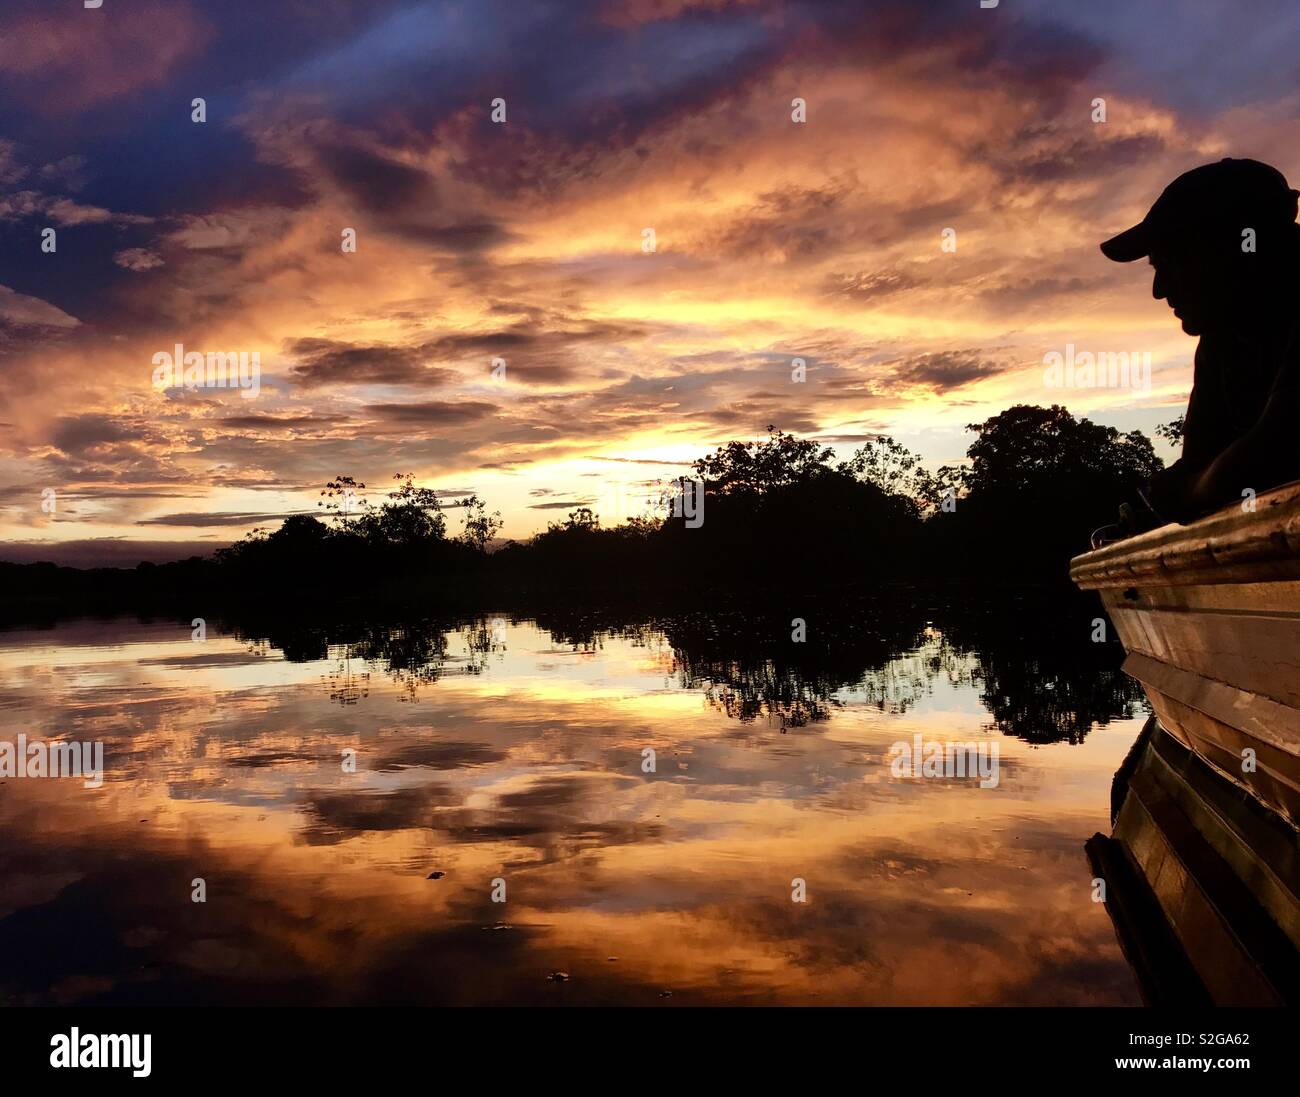 A tourist enjoys a sunset in the Amazon rainforest in the Pacaya-Samiria reserve of Loreto, Peru Stock Photo